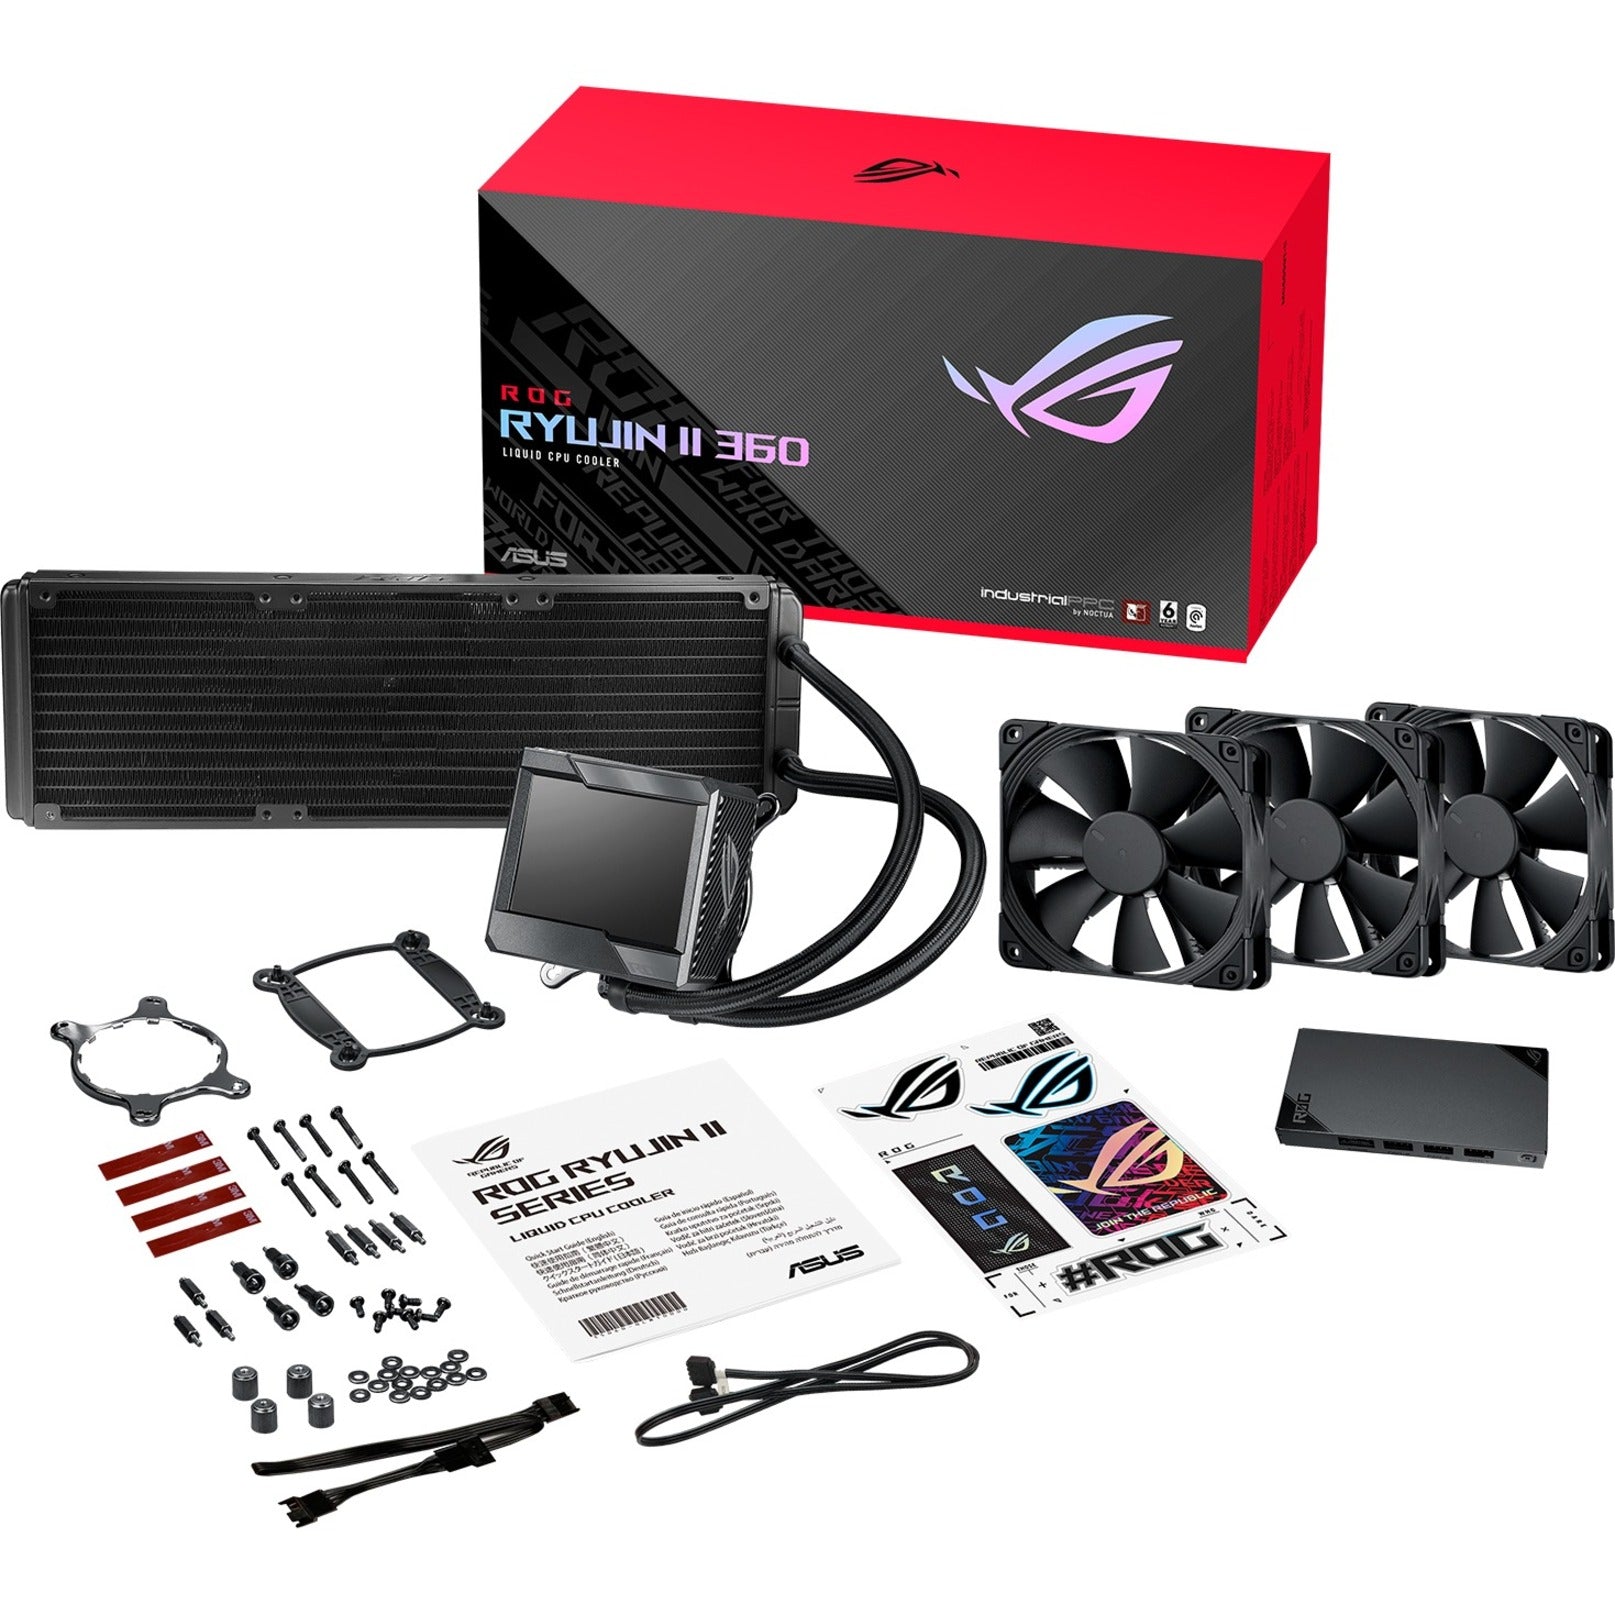 Asus ROG ROGRYUJINII360 Ryujin II 360 AIO CPU Cooler, RGB Fans, High Airflow, Low Noise